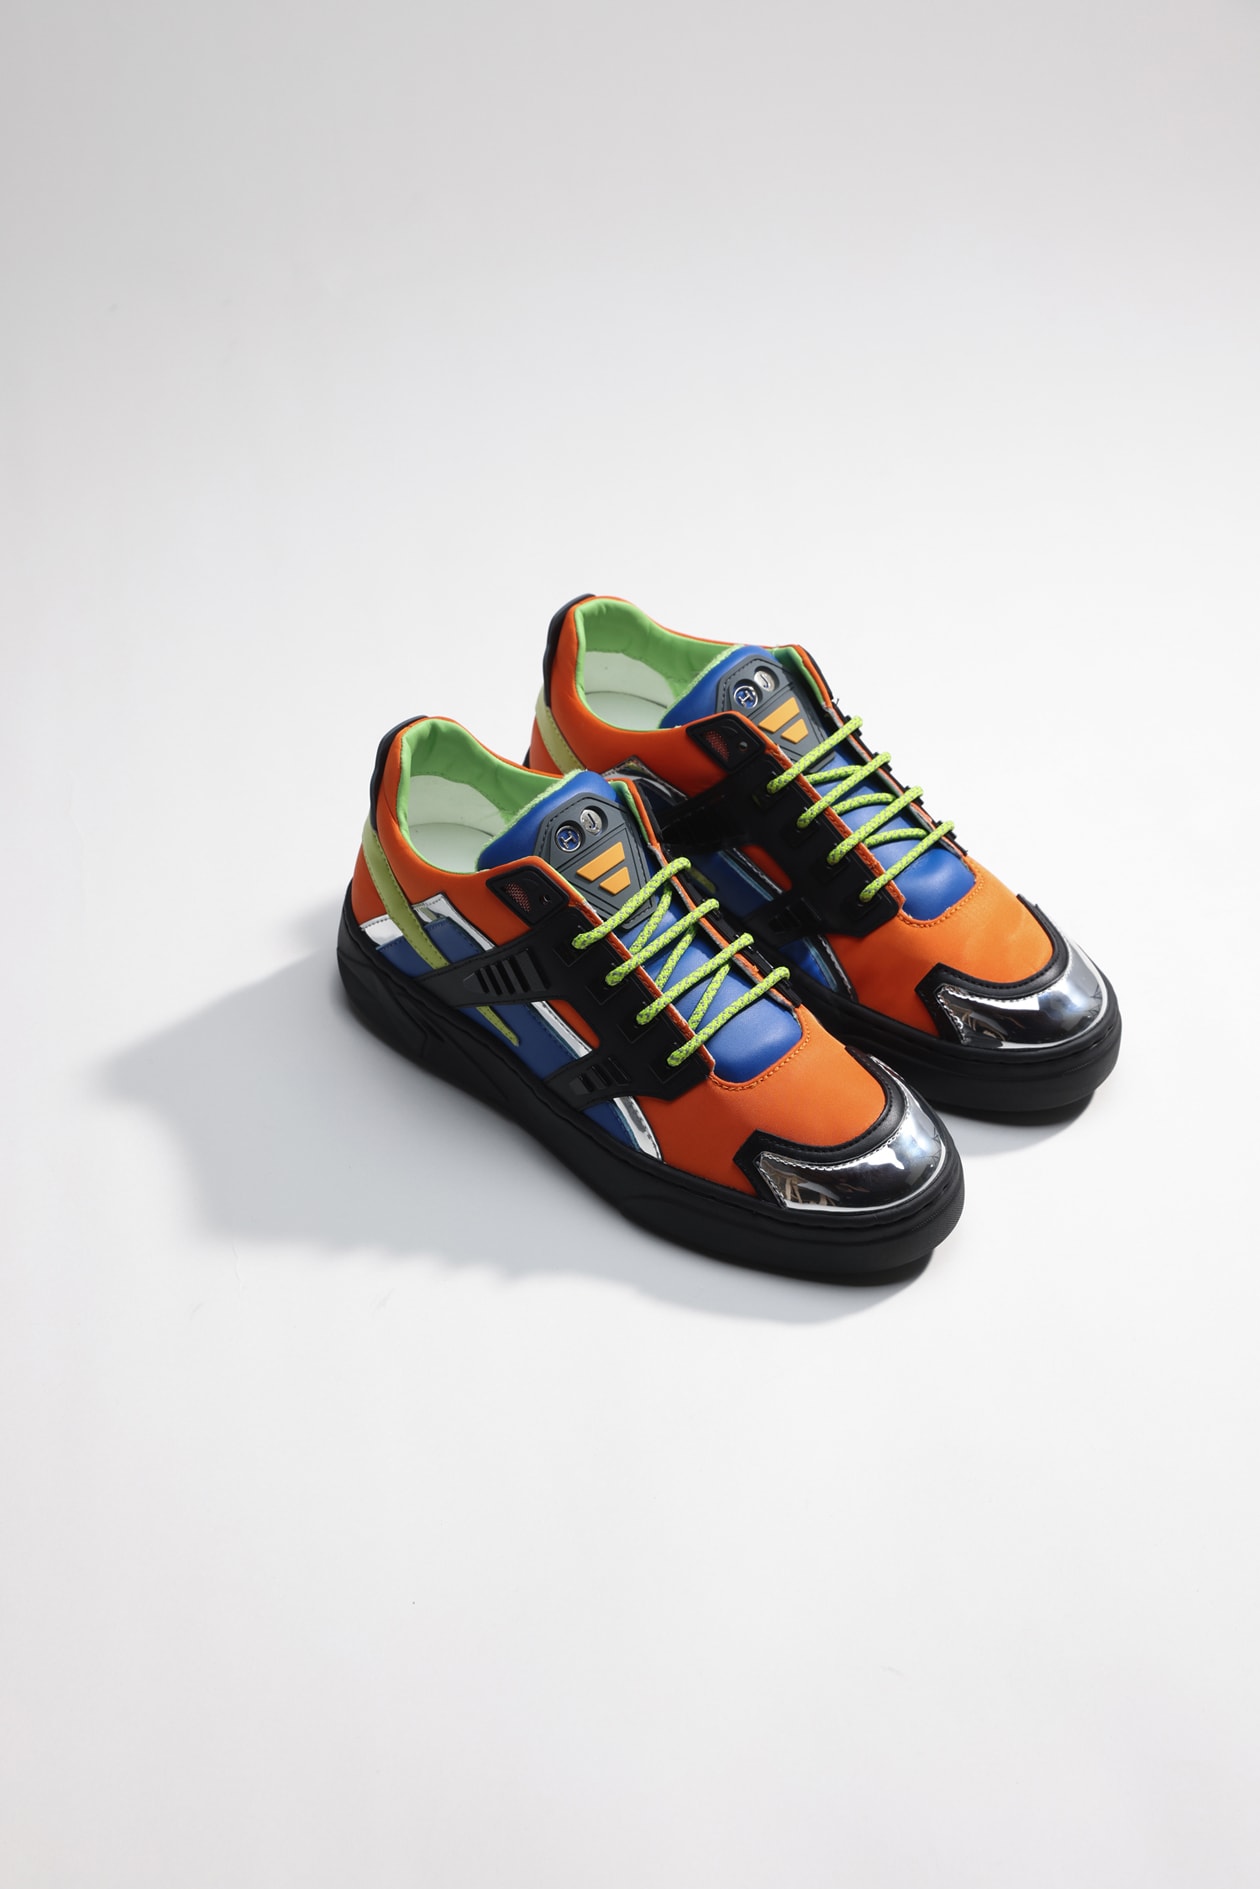 Hide&amp;jack Low Top Sneaker - Mini Silverstone Orange Black